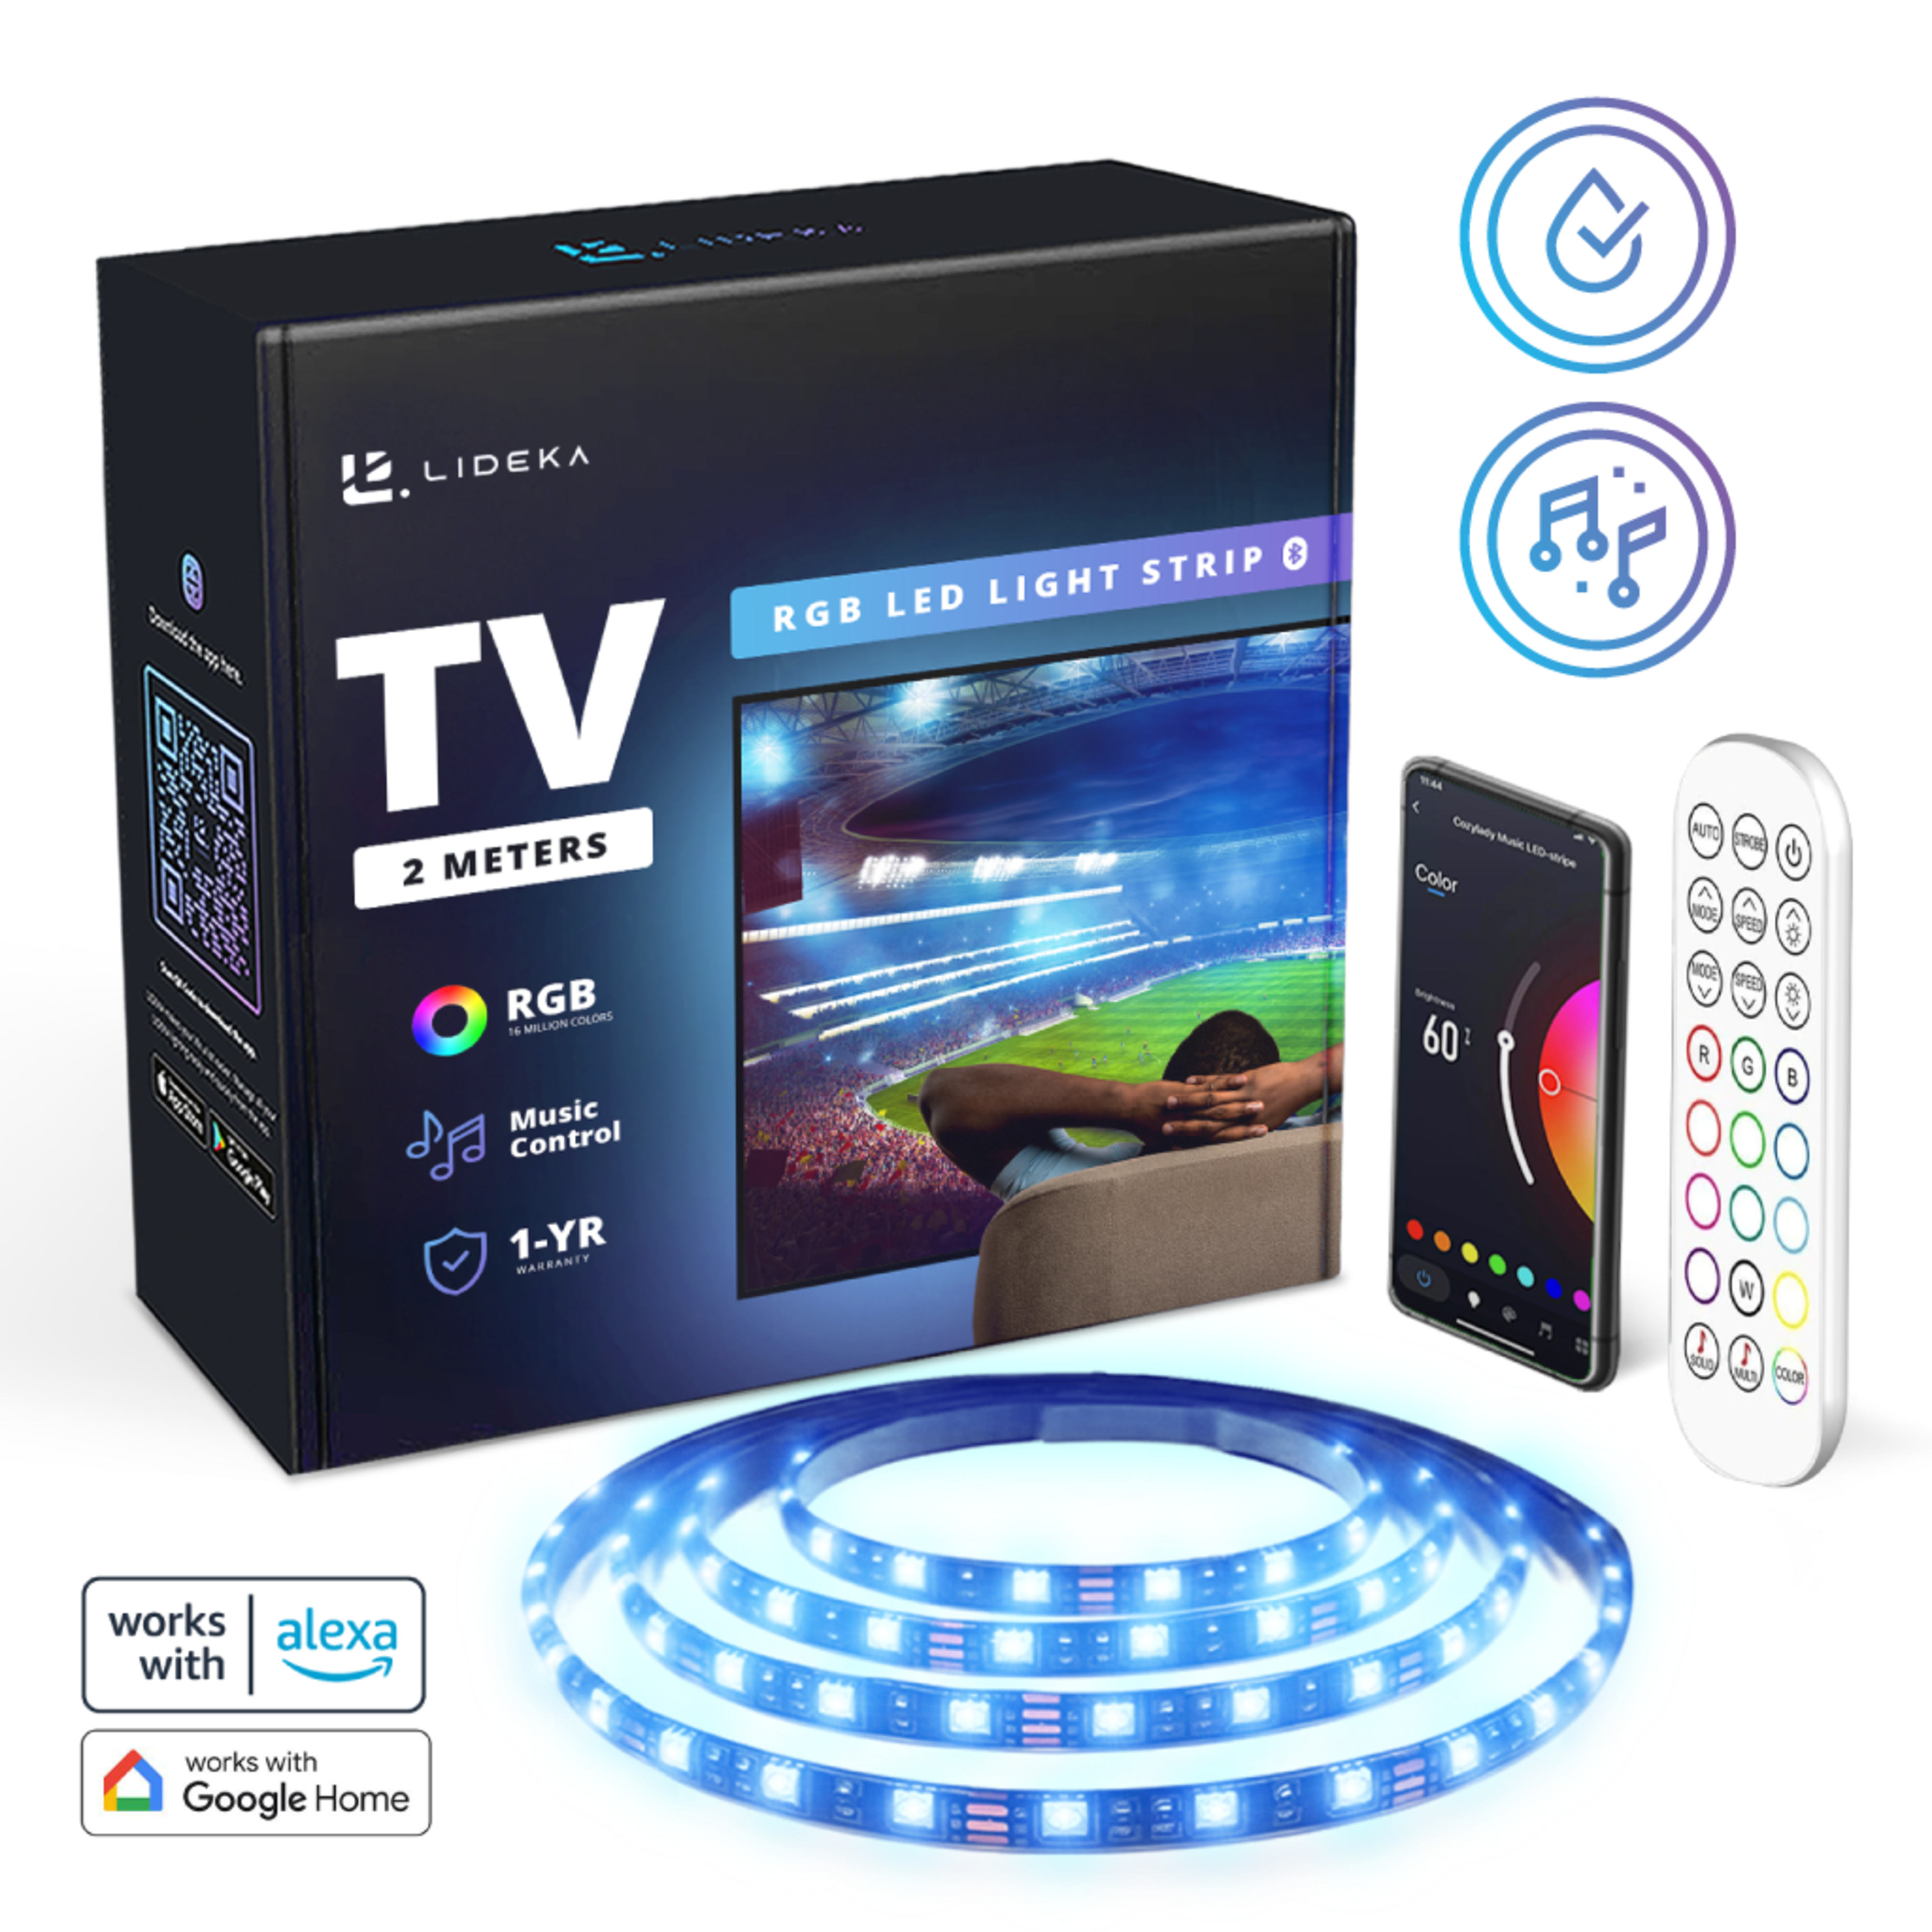 TV LIDEKA LED LED Strips 2m Hintergrundbeleuchtung Multicolors